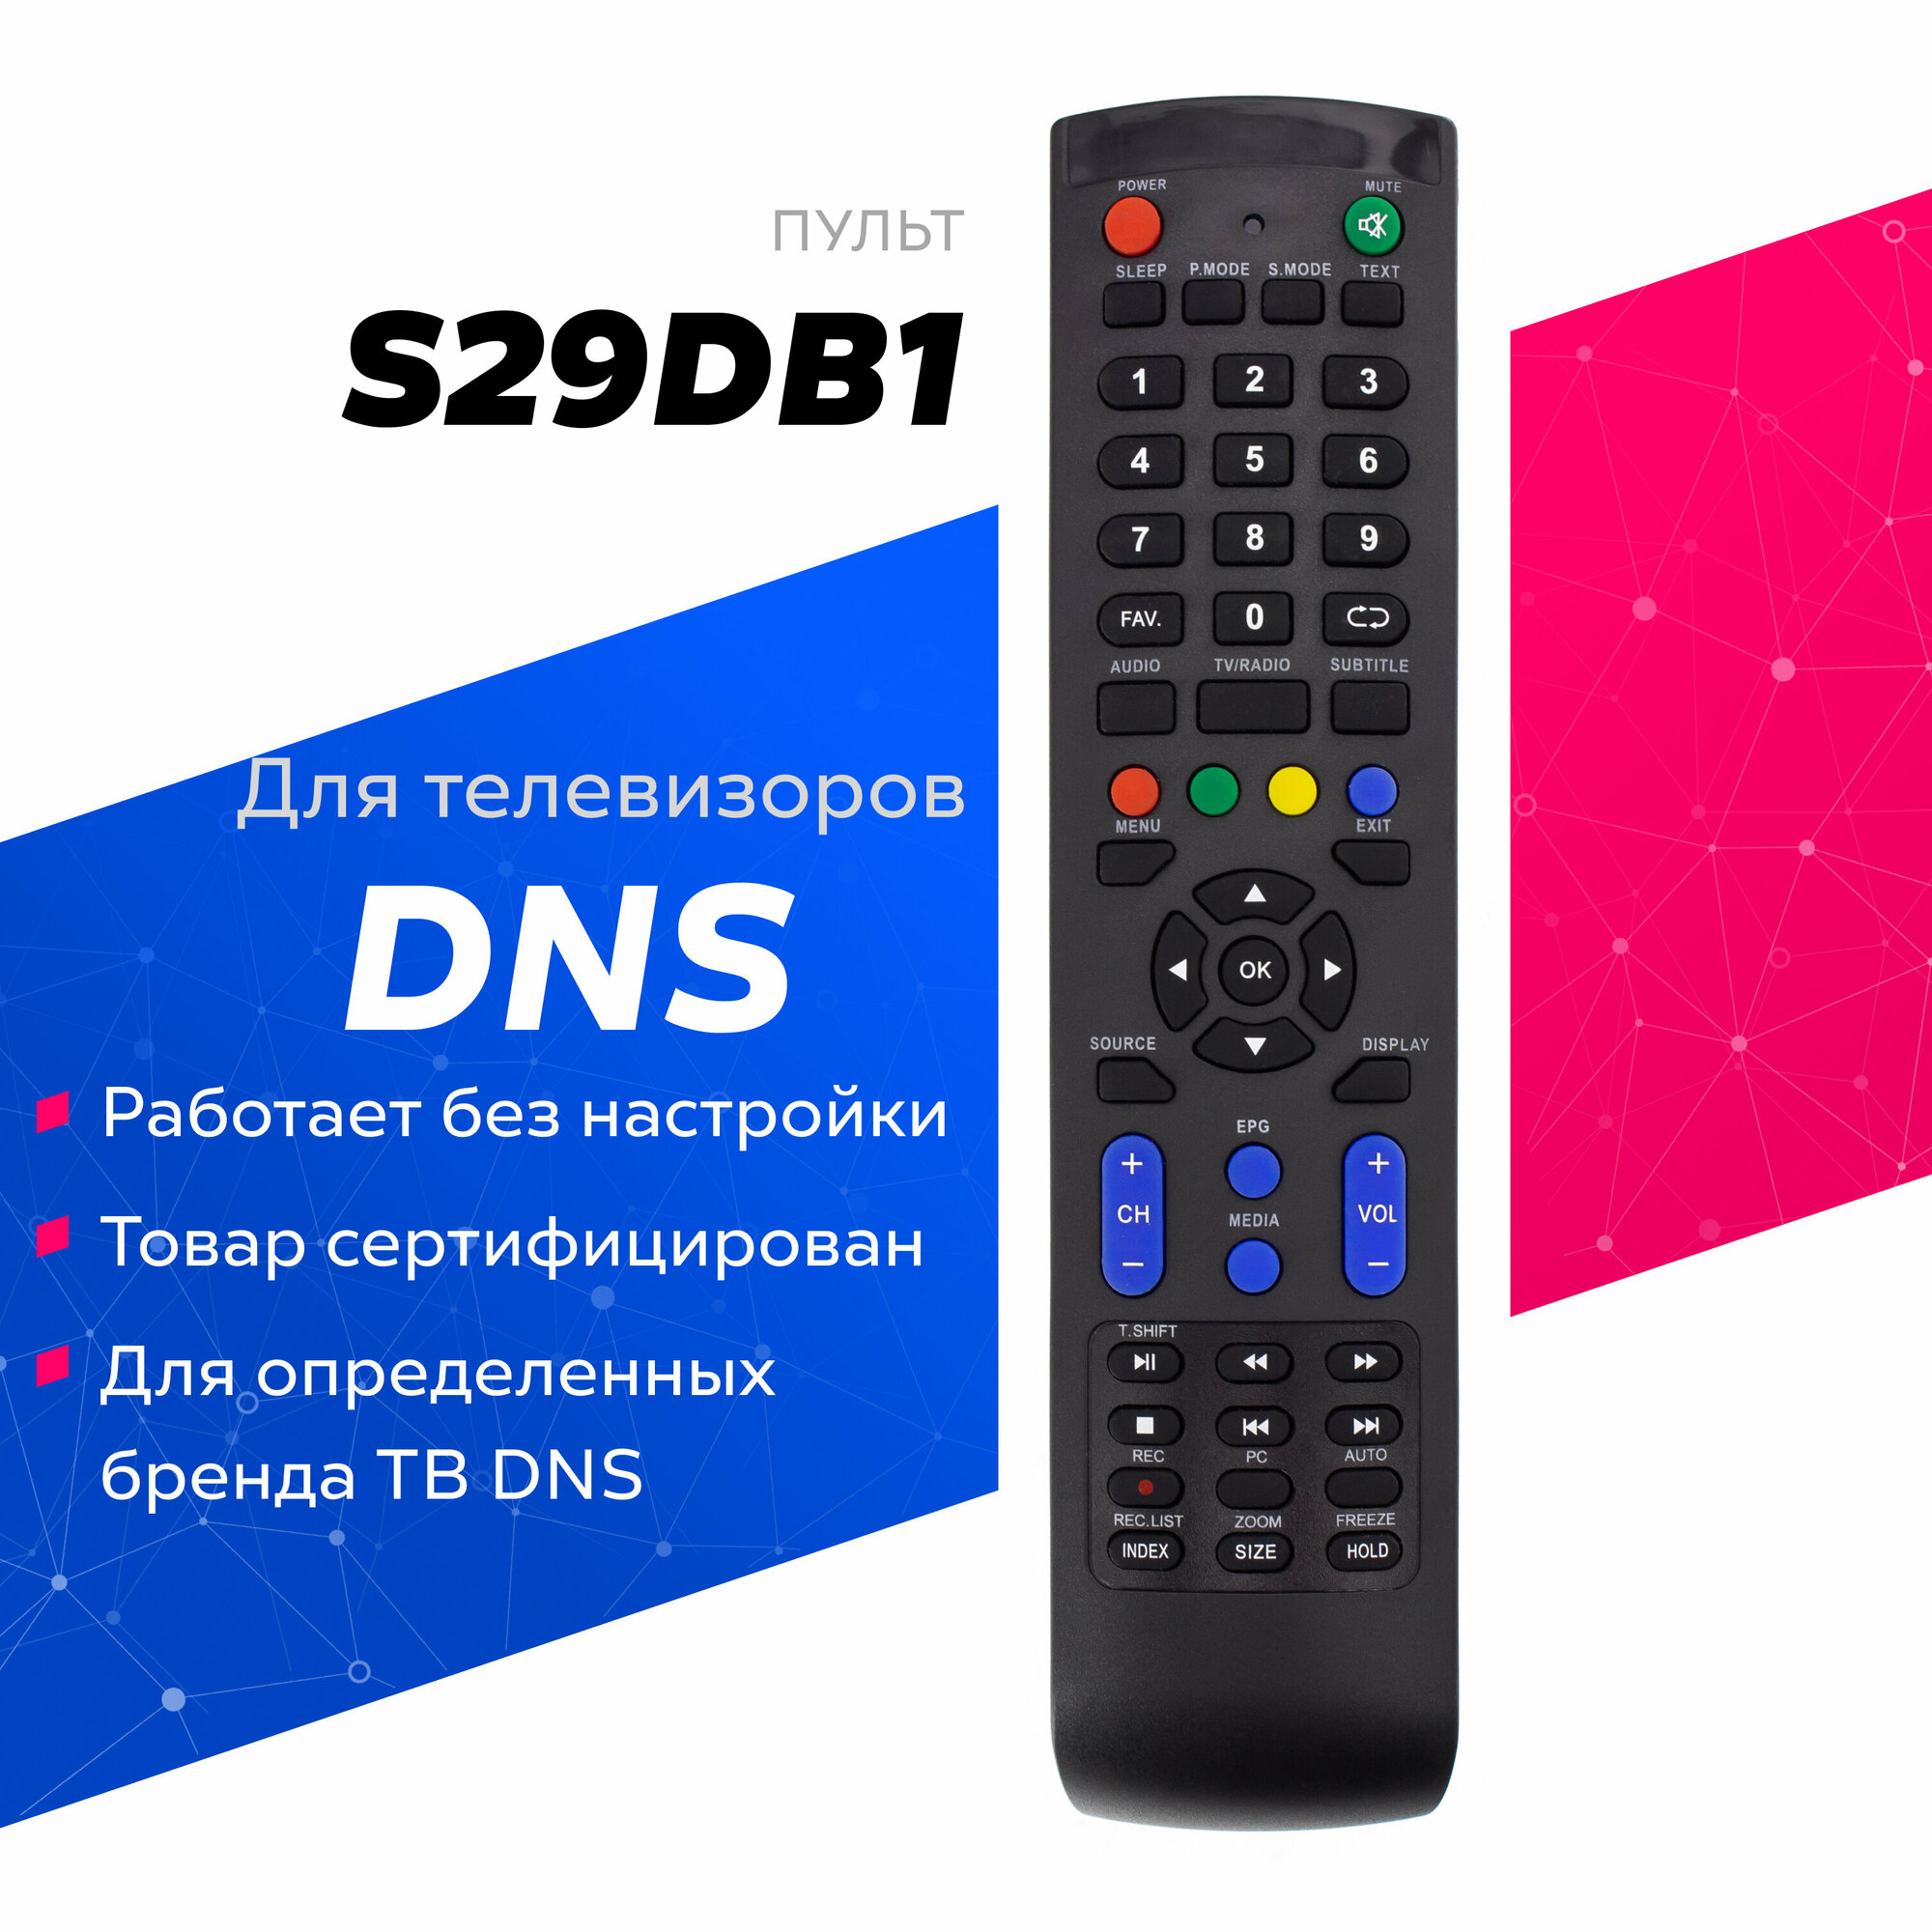 Пульт Huayu S29DB1 (для телевизоров DNS)